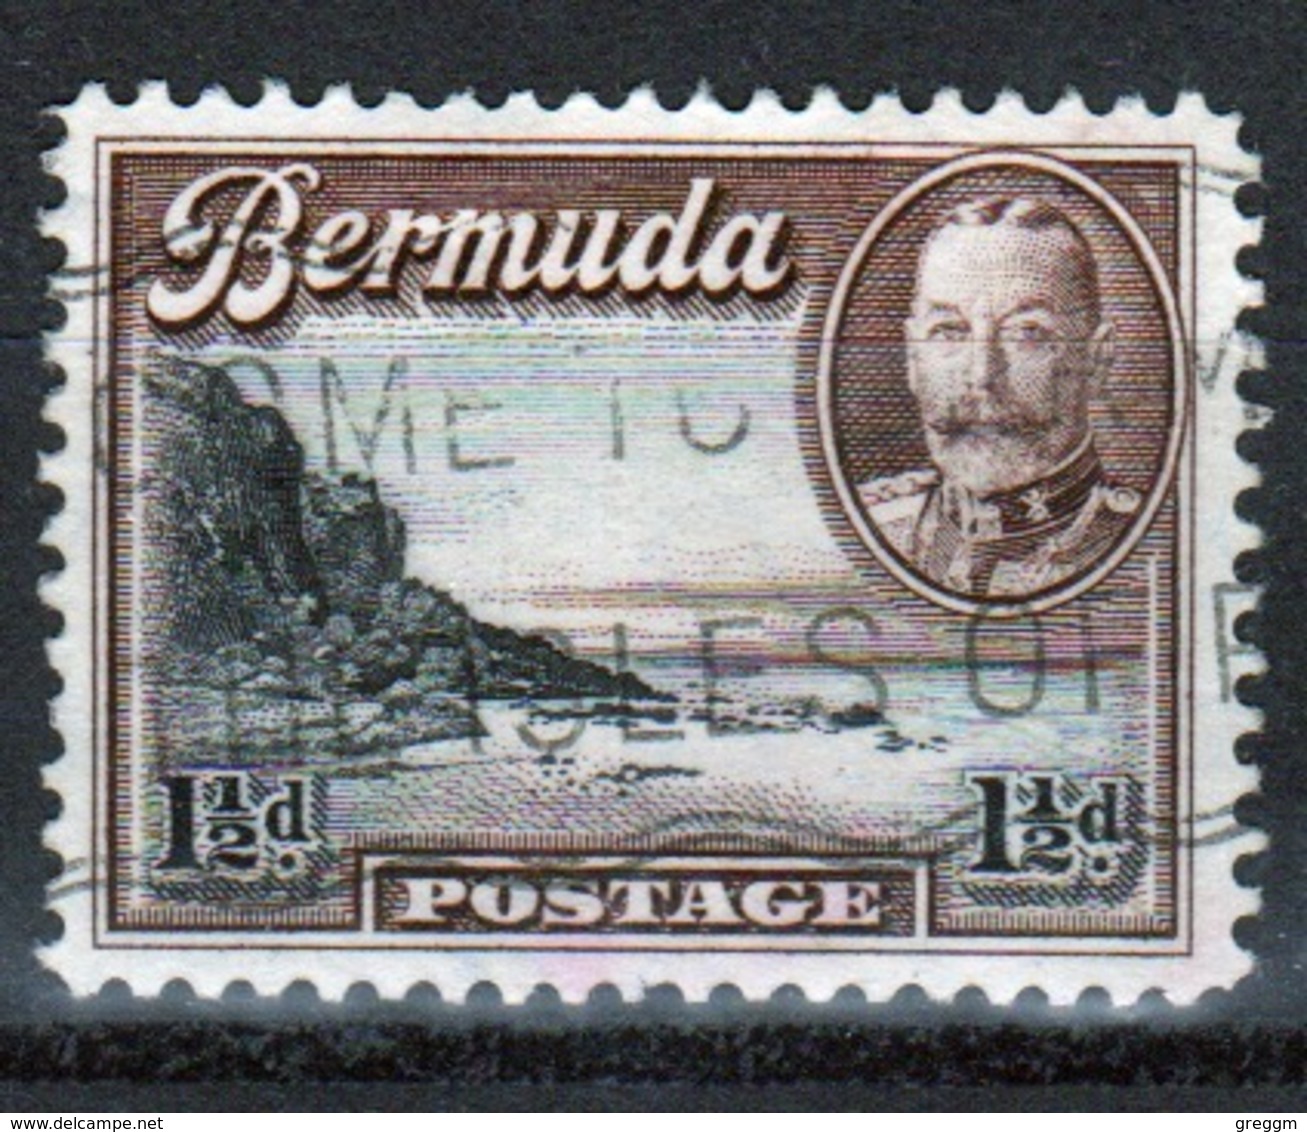 Bermuda George V 1½d Single Stamp From The 1936 Definitive Set. - Bermuda